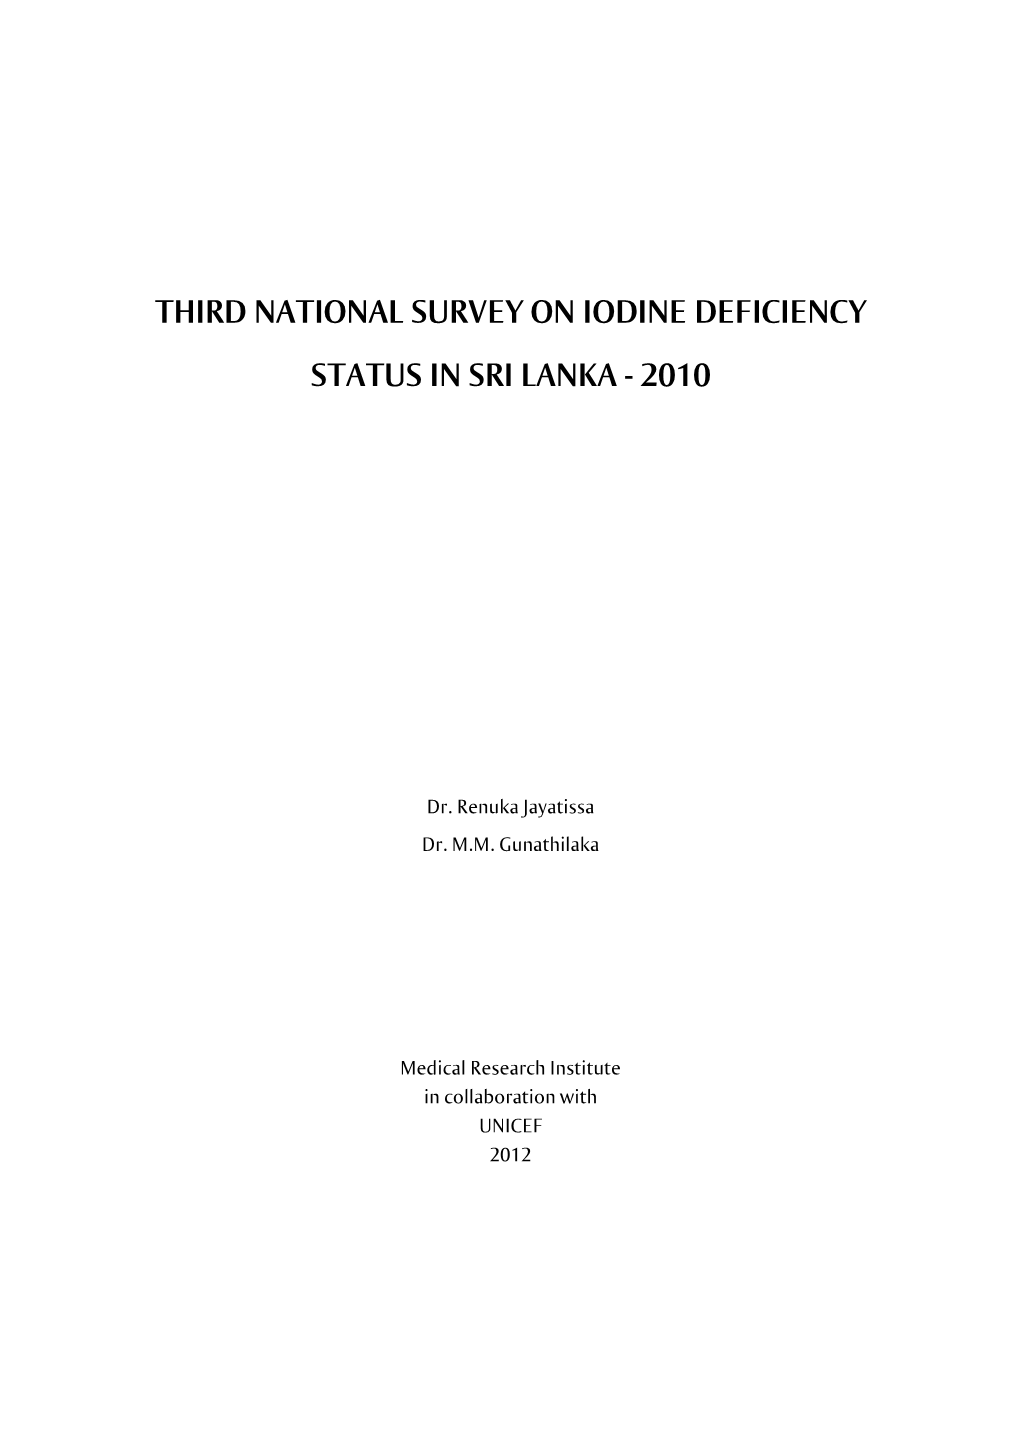 Third National Survey on Iodine Deficiency Status in Sri Lanka - 2010